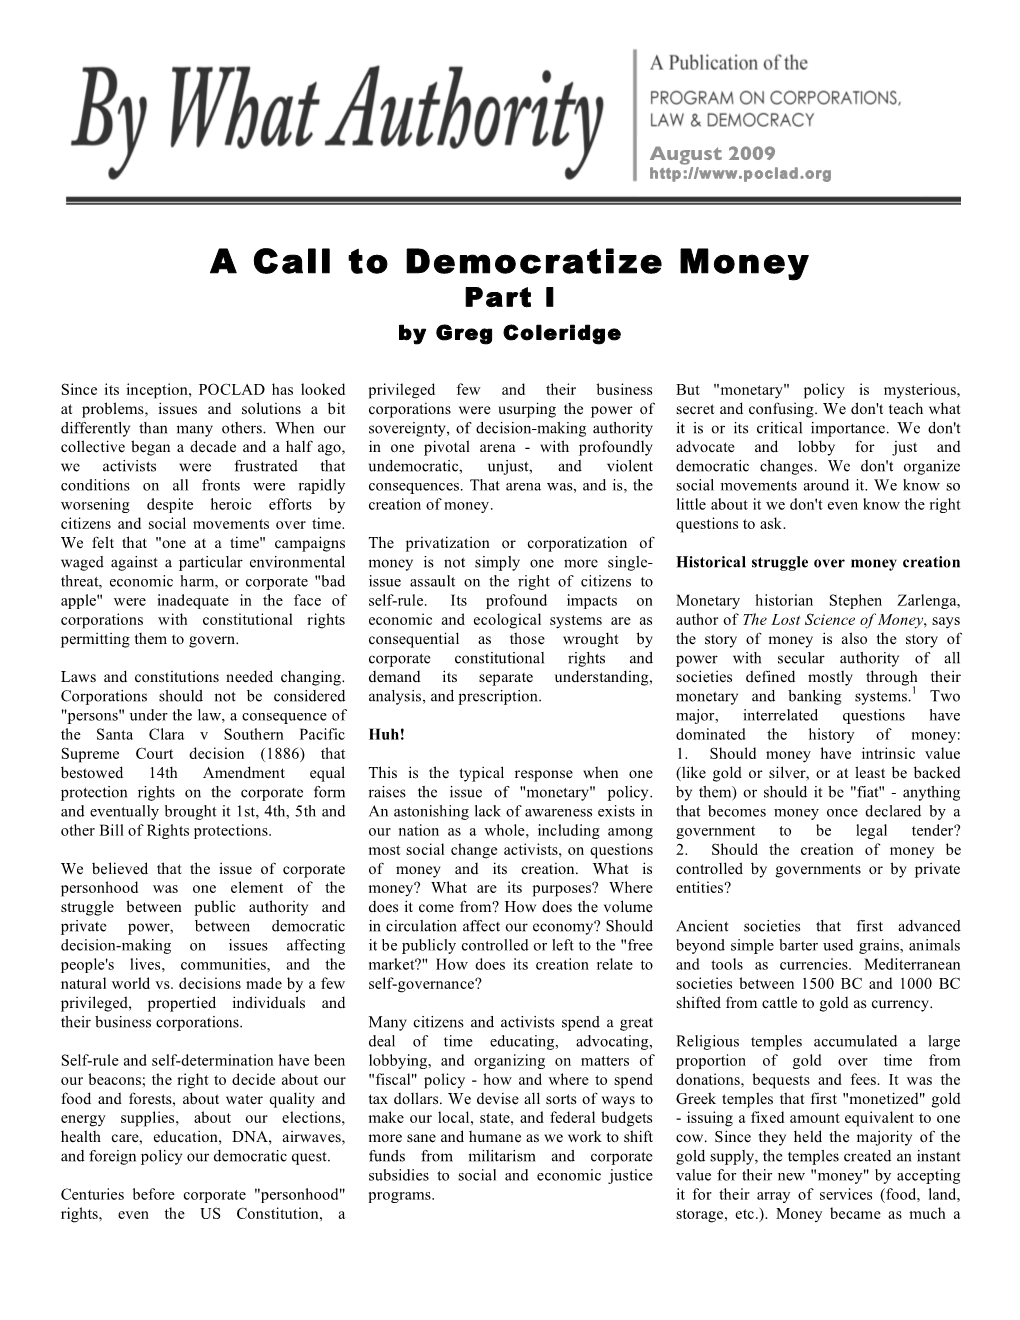 A Call to Democratize Money Part I by Greg Coleridge